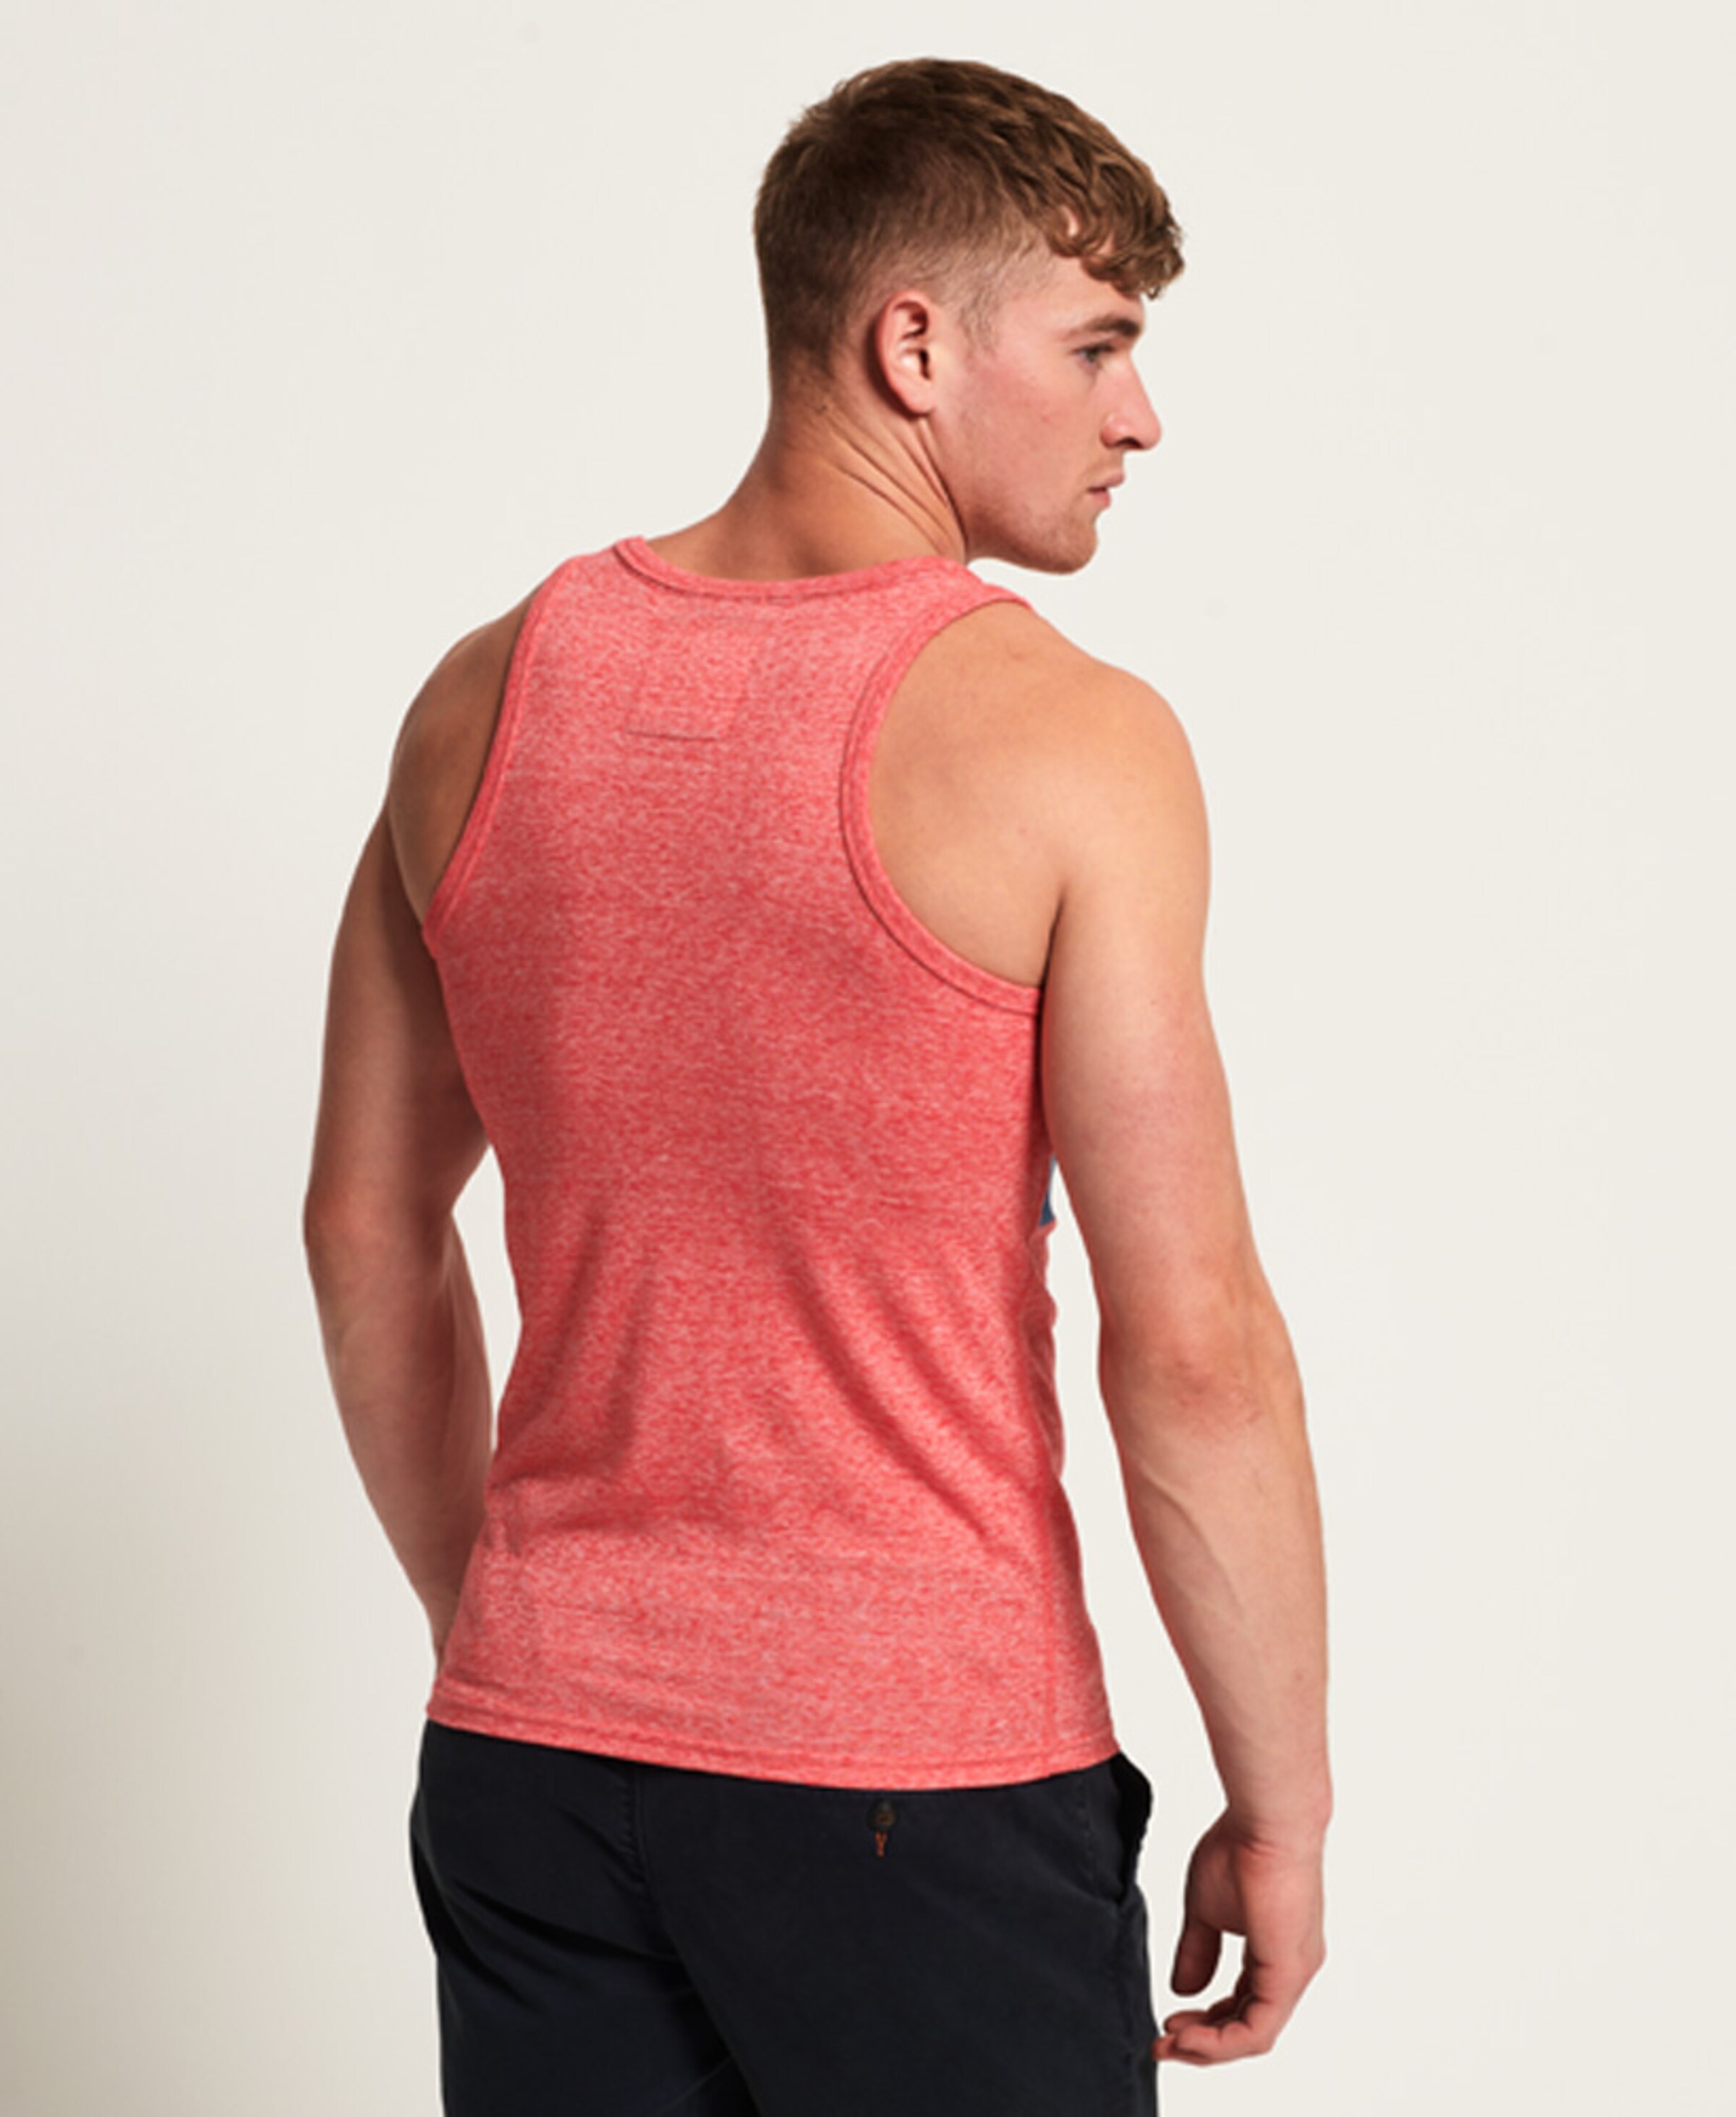 Männer Shirts Superdry Top in Pink - AG98964